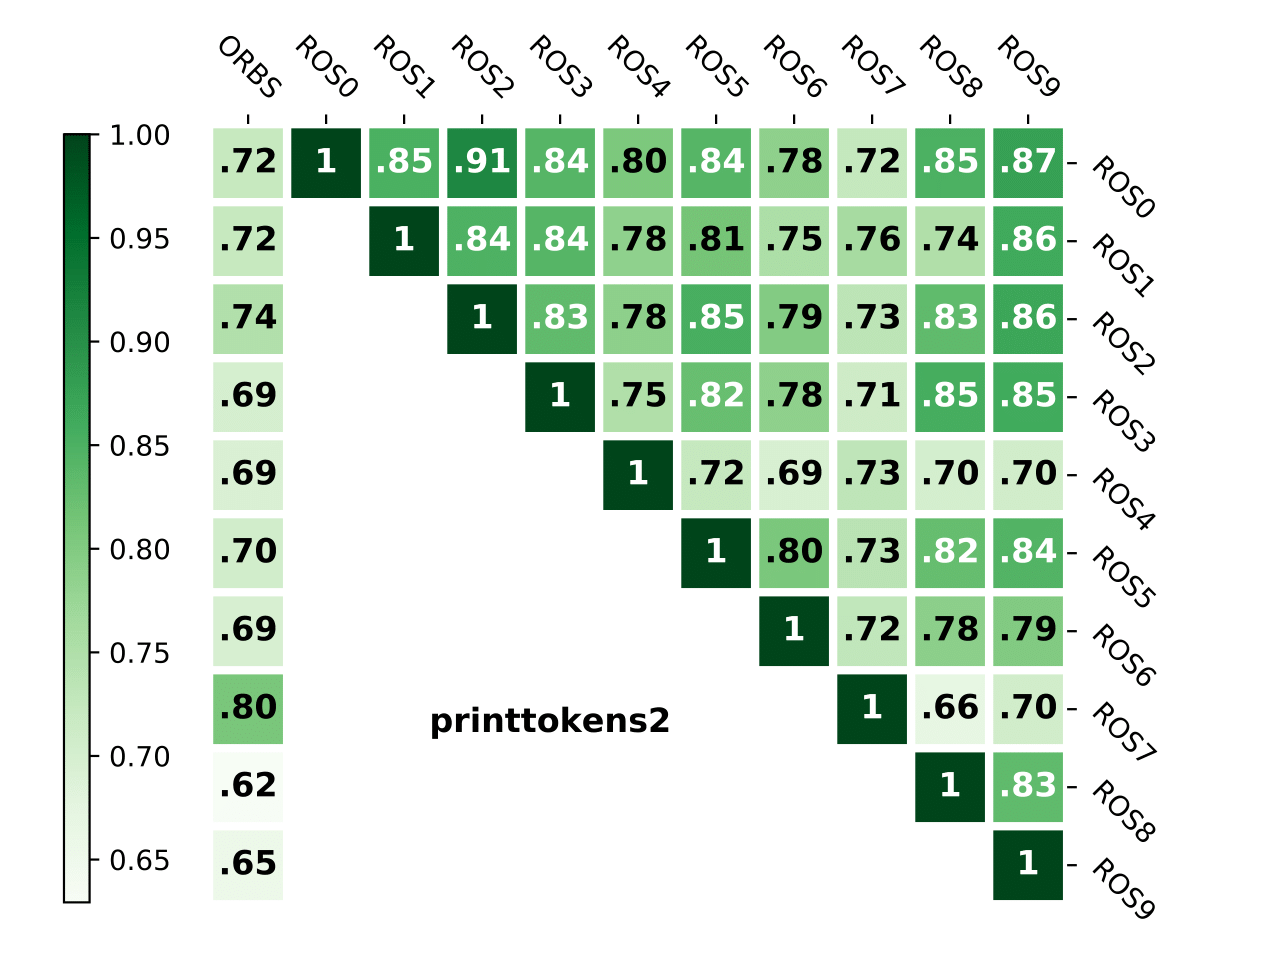 printtokens2_criterion1